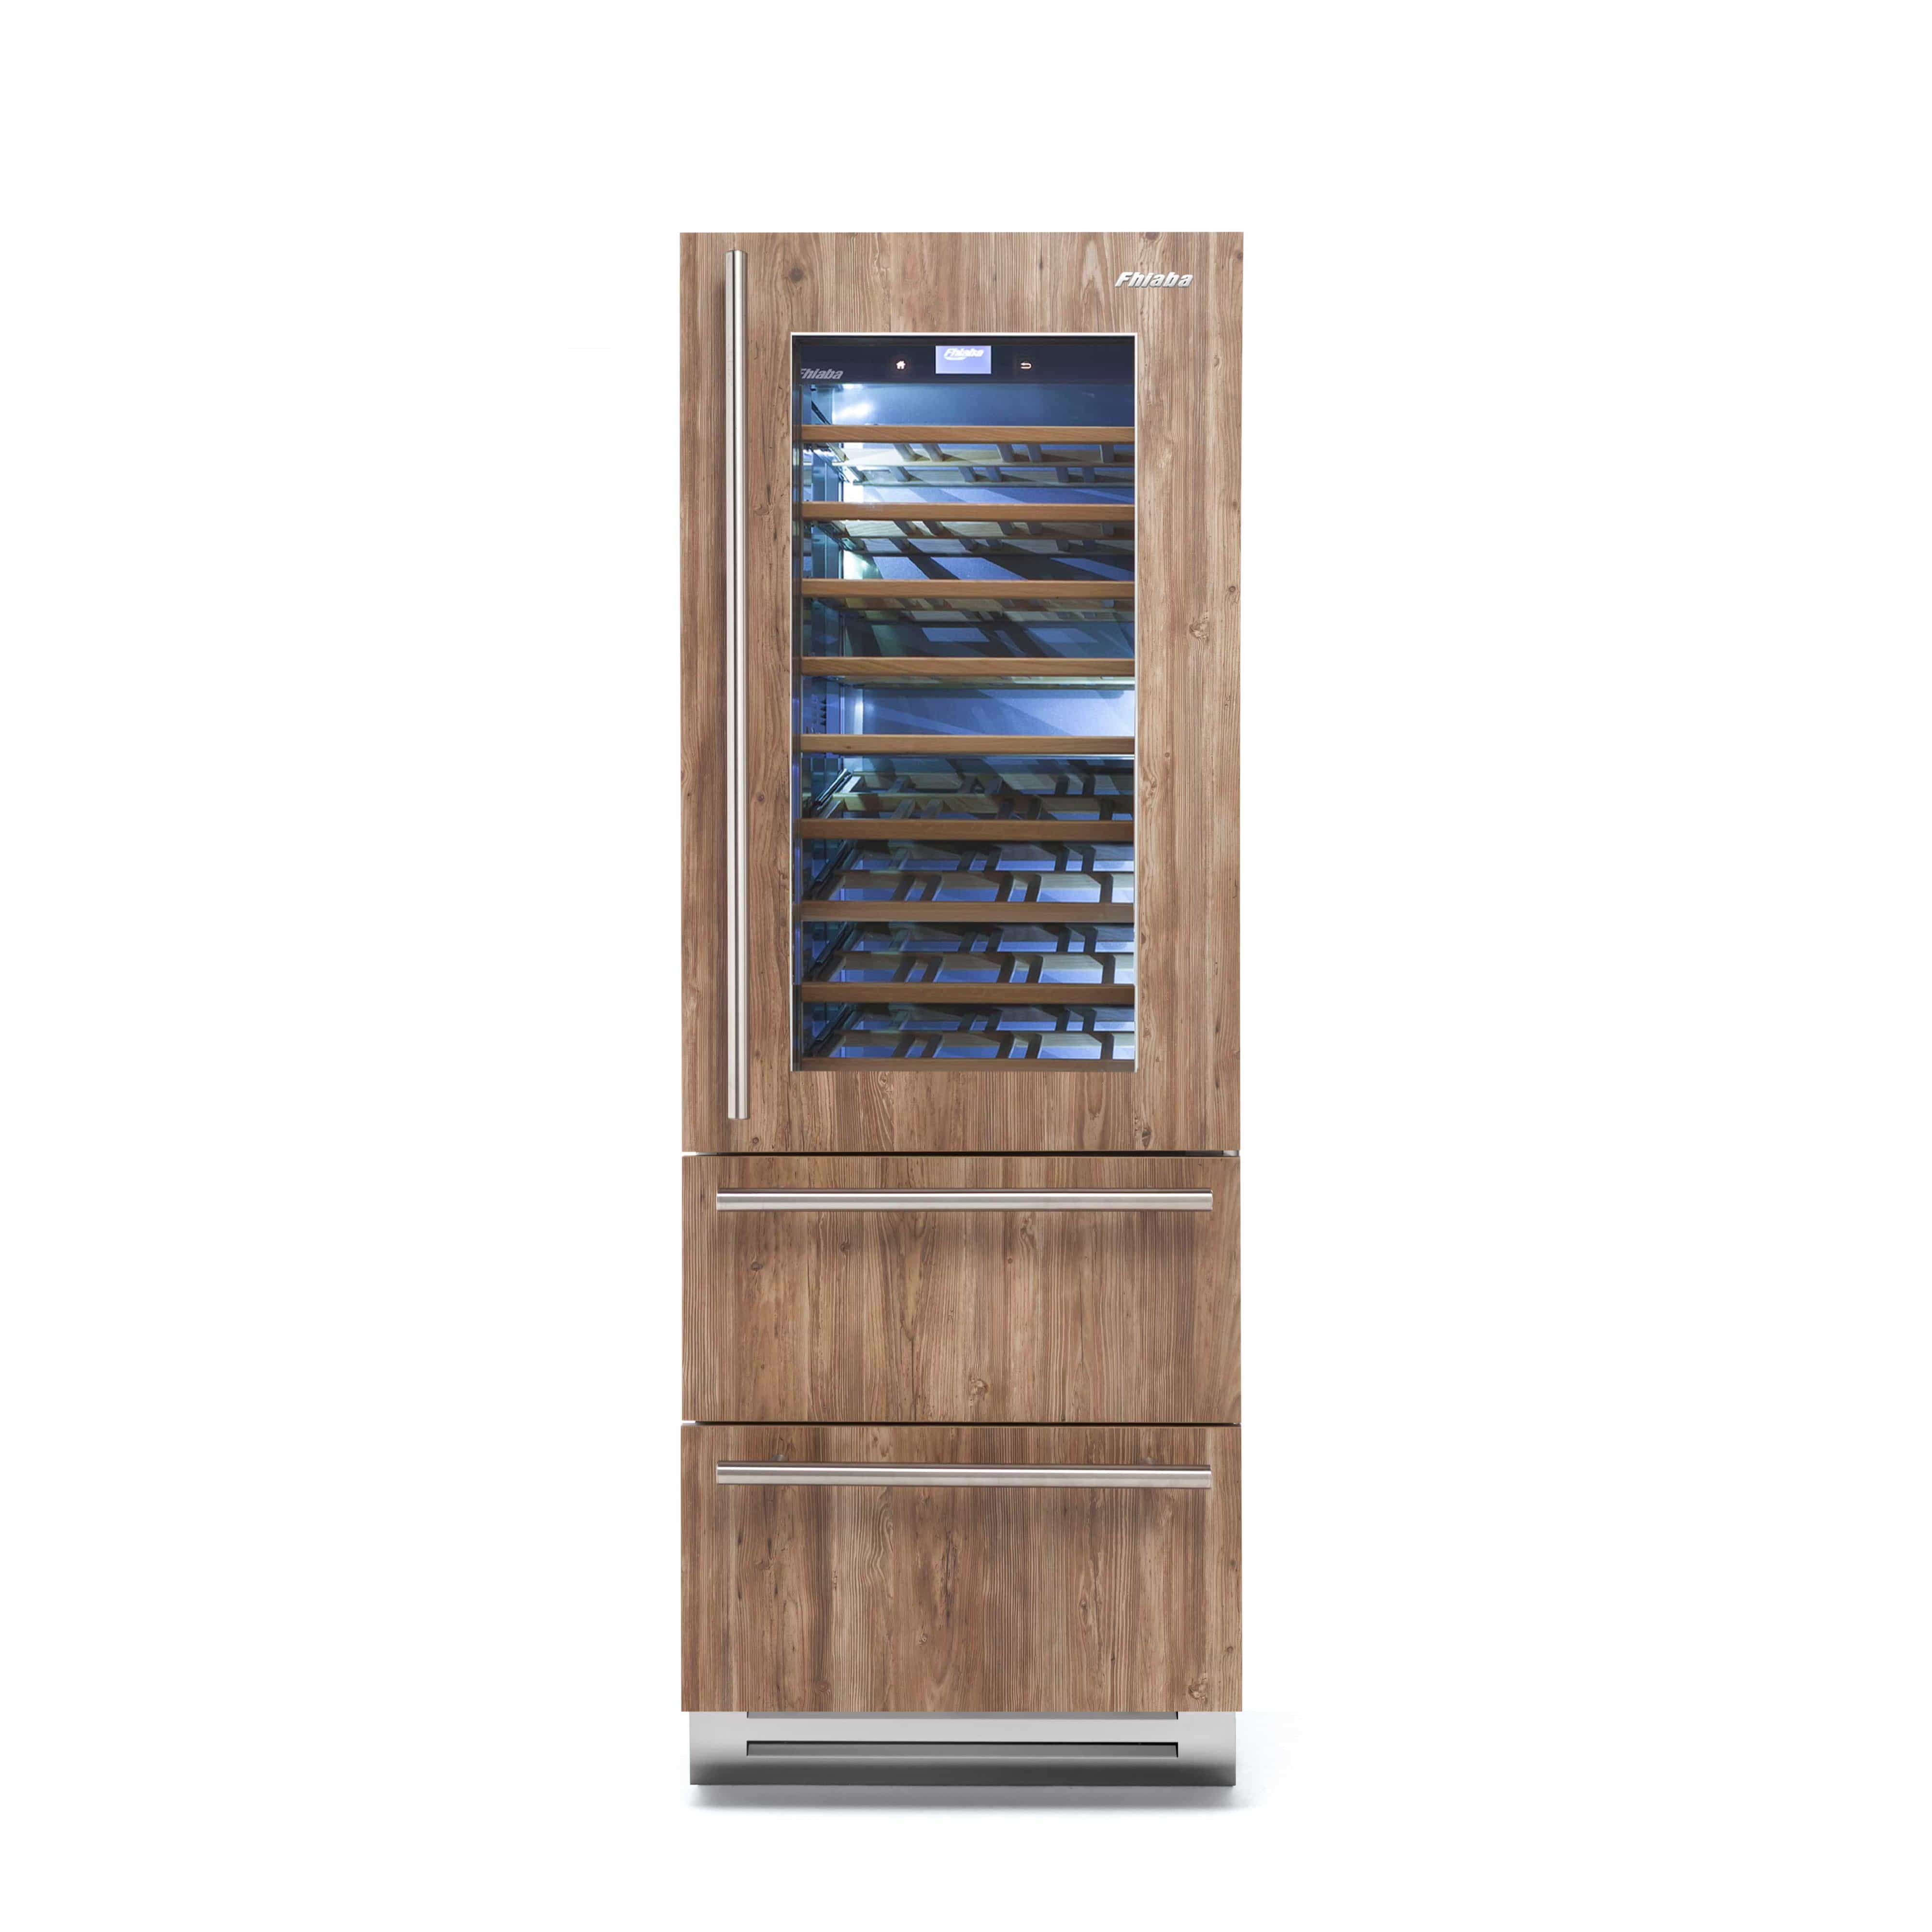 Fhiaba 30-inch, Built-in Refrigeration with Wine Storage FI30BDW-RGO1 Refrigerators FI30BDWRGO1 Luxury Appliances Direct